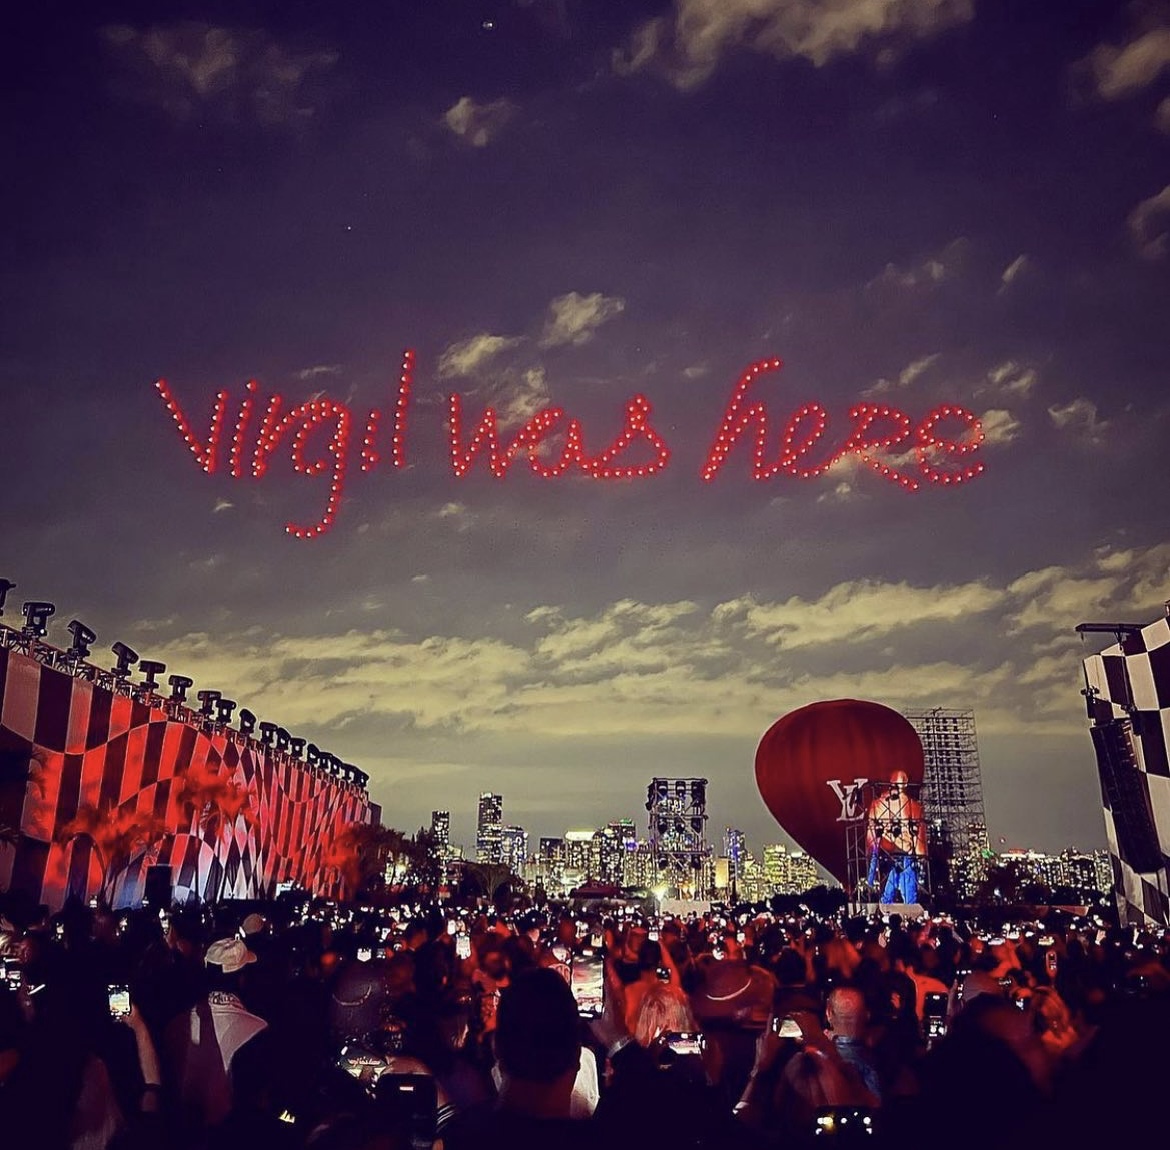 Virgil Was Here: Miami Hosts Virgil Abloh's Final Louis Vuitton Runway Show